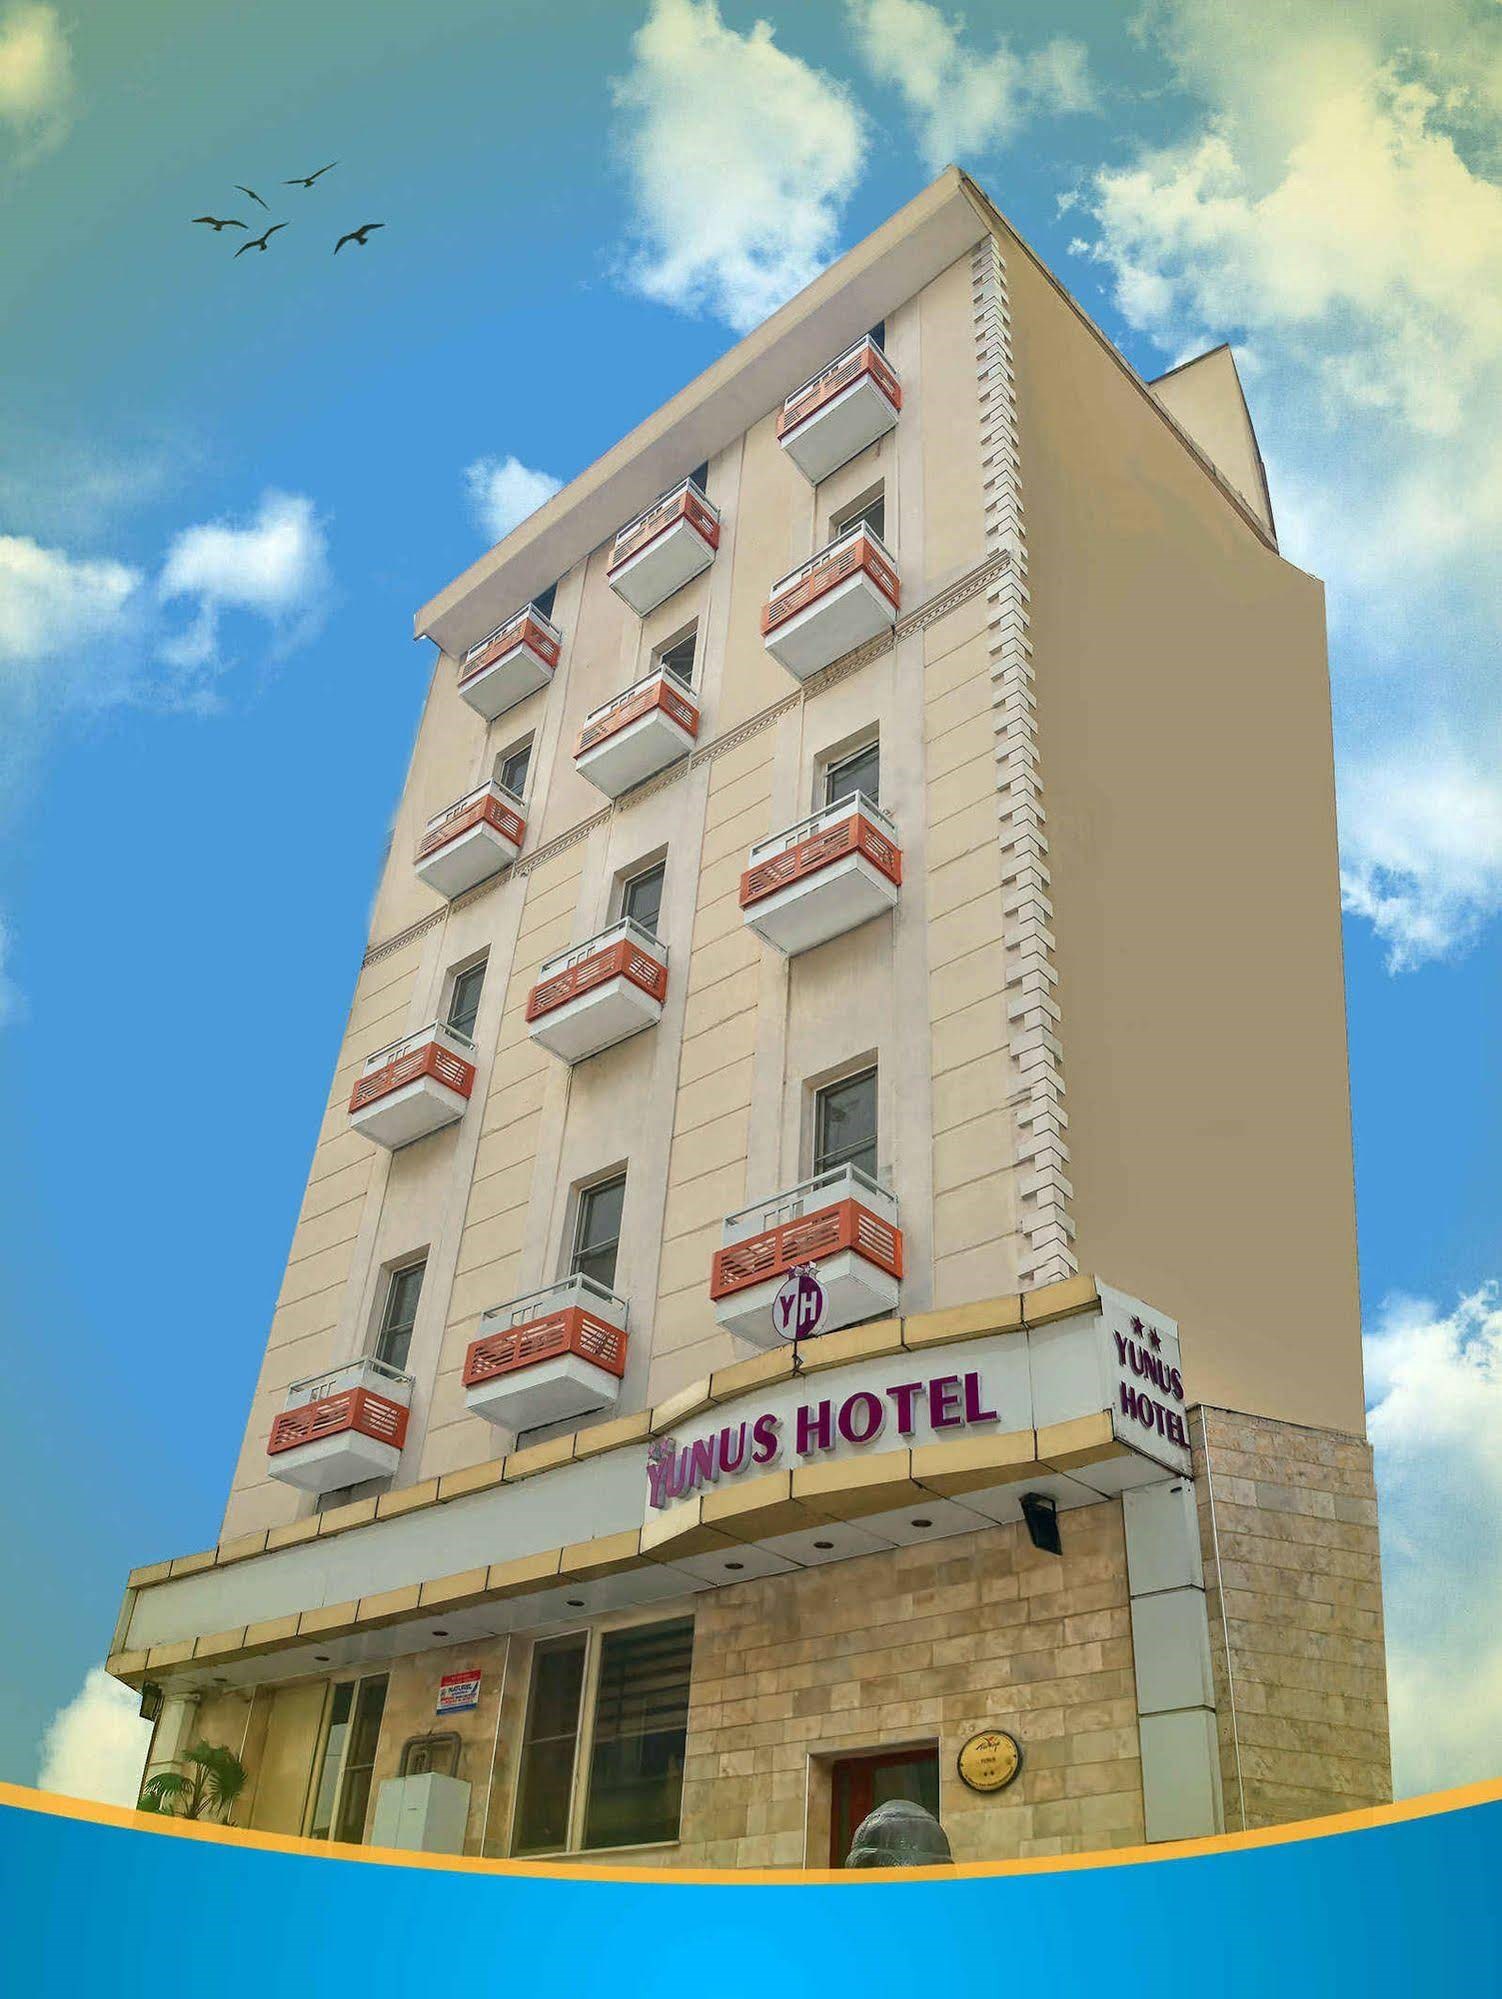 Yunus Hotel